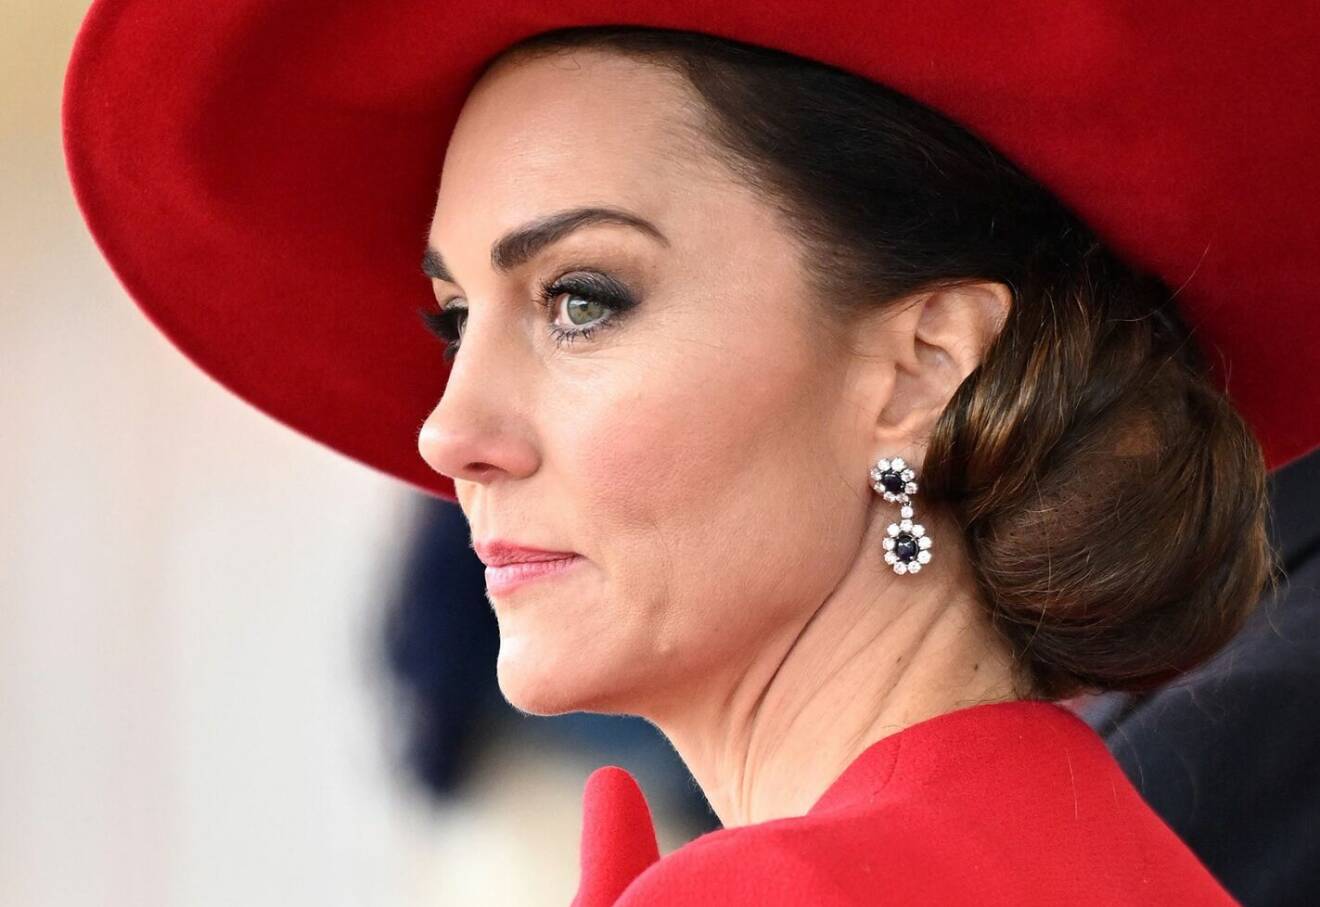 Prinsessan Kate i profil klädd i rött